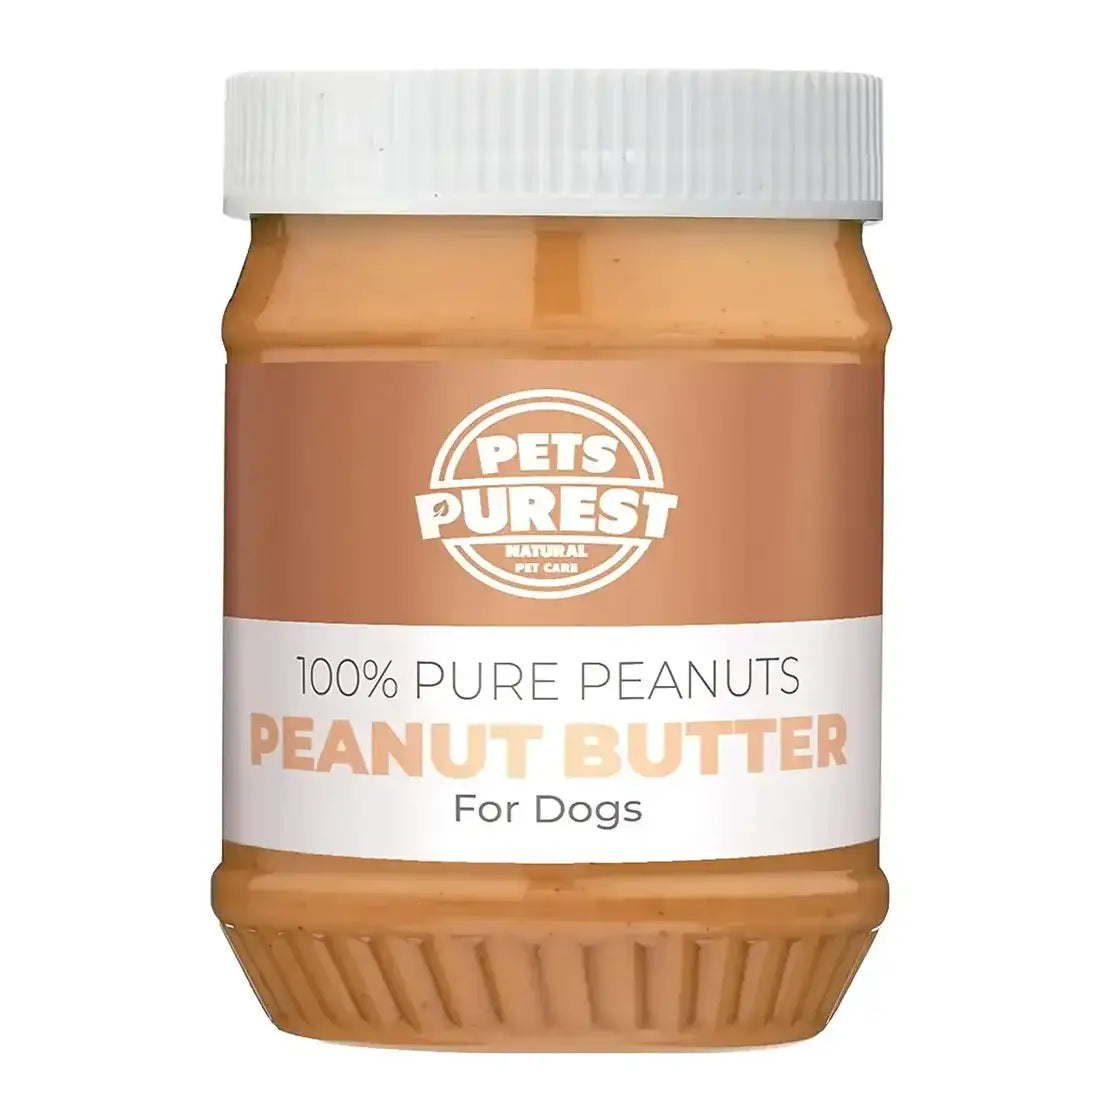 Pets Purest Natural Peanut Butter